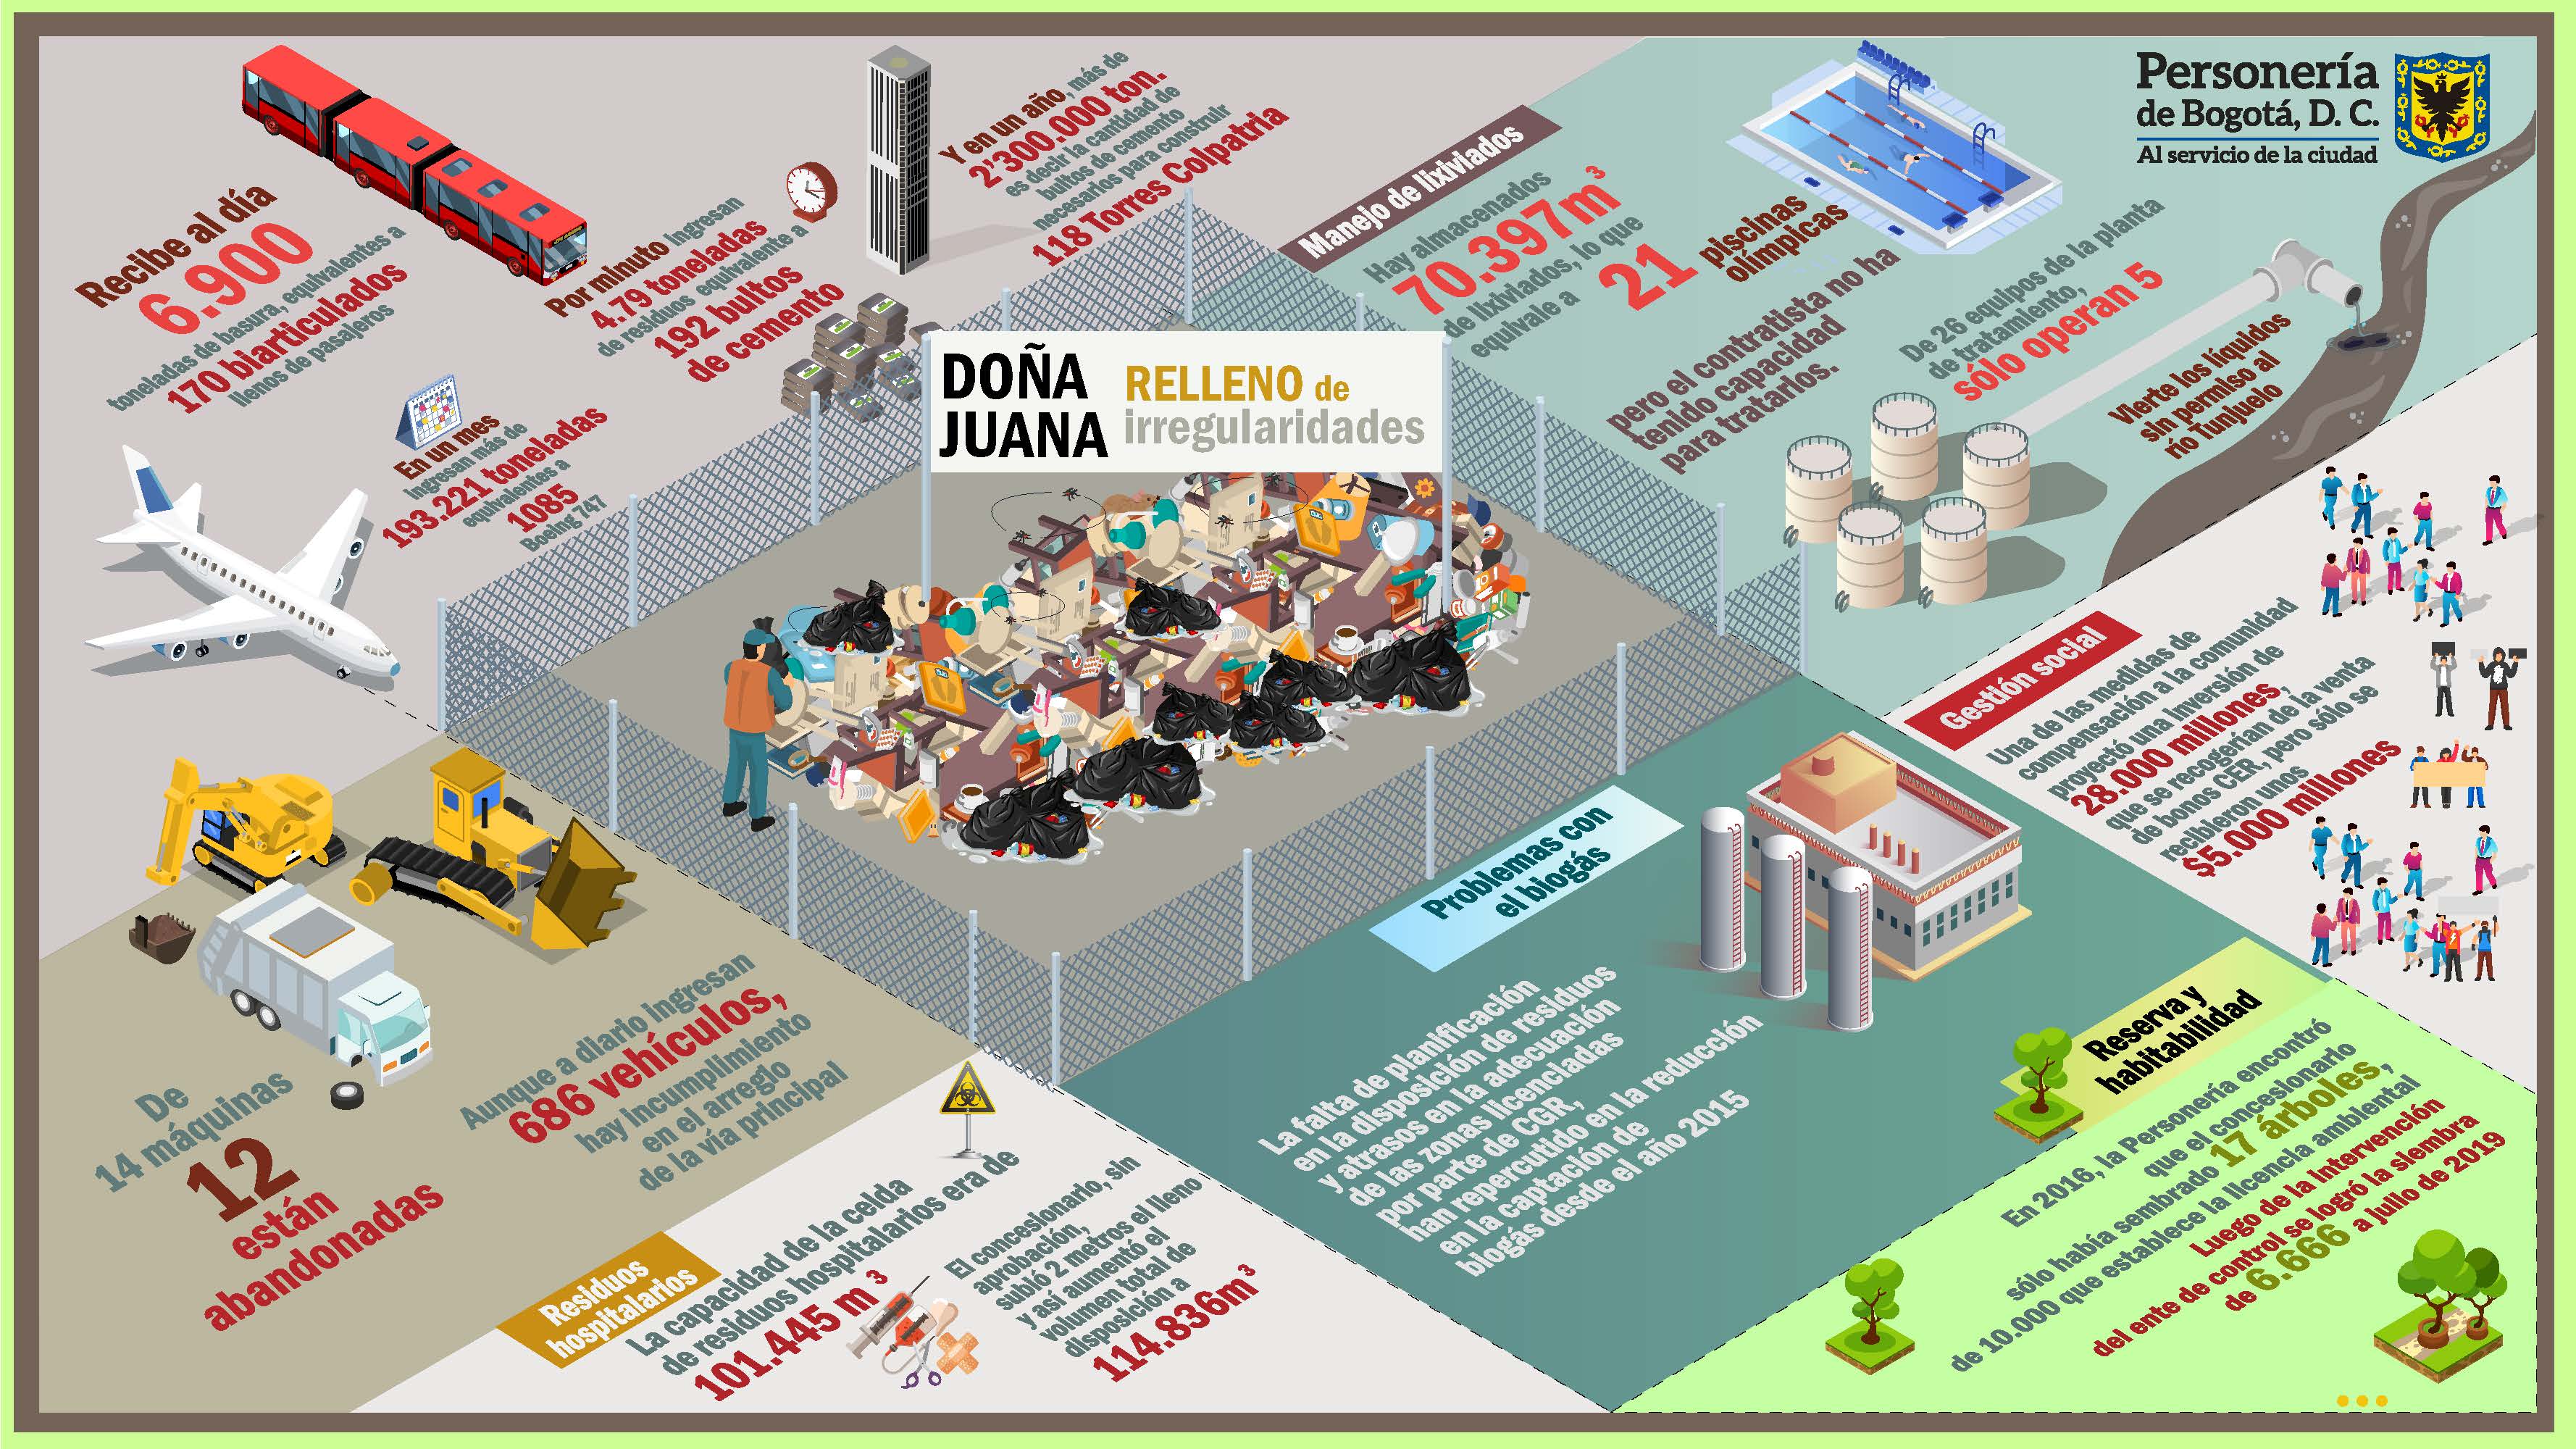 Infografia_Dona_Juana-ok-horizontal.jpg - 777.81 kB